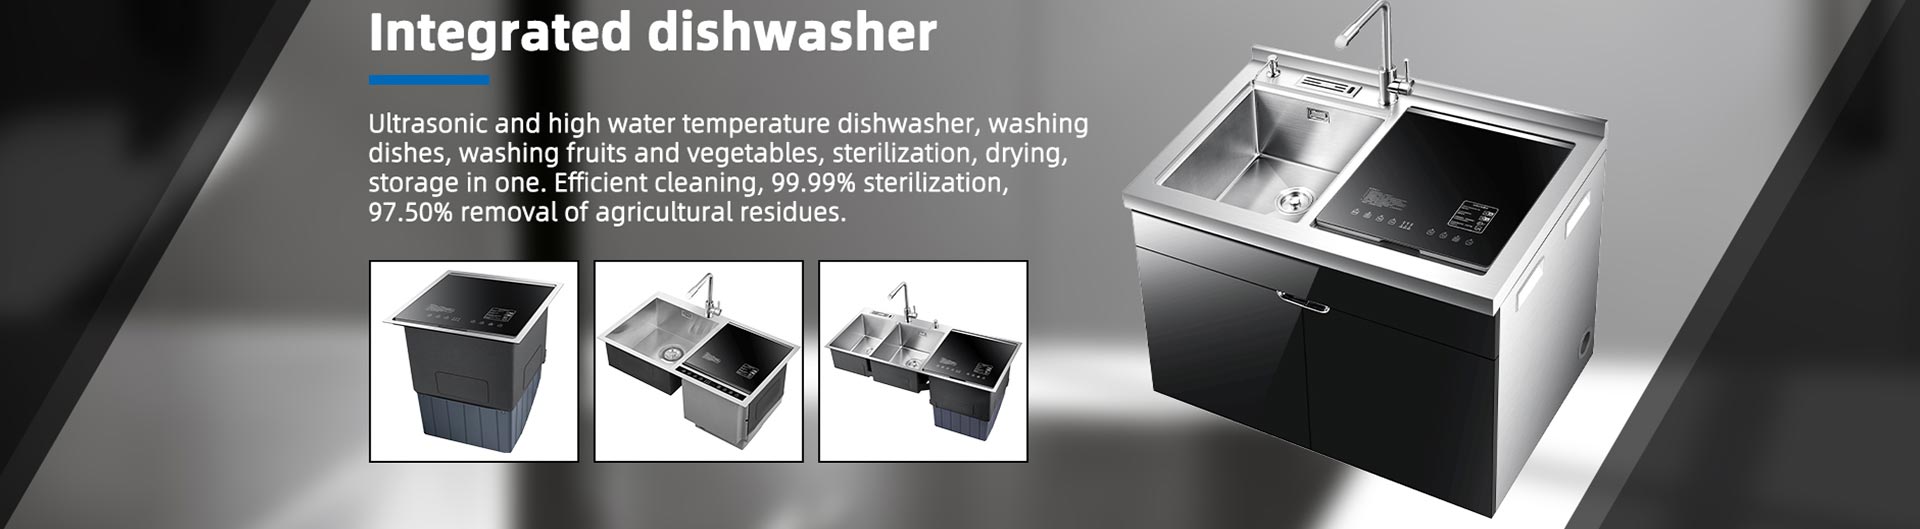 Sink dishwasher